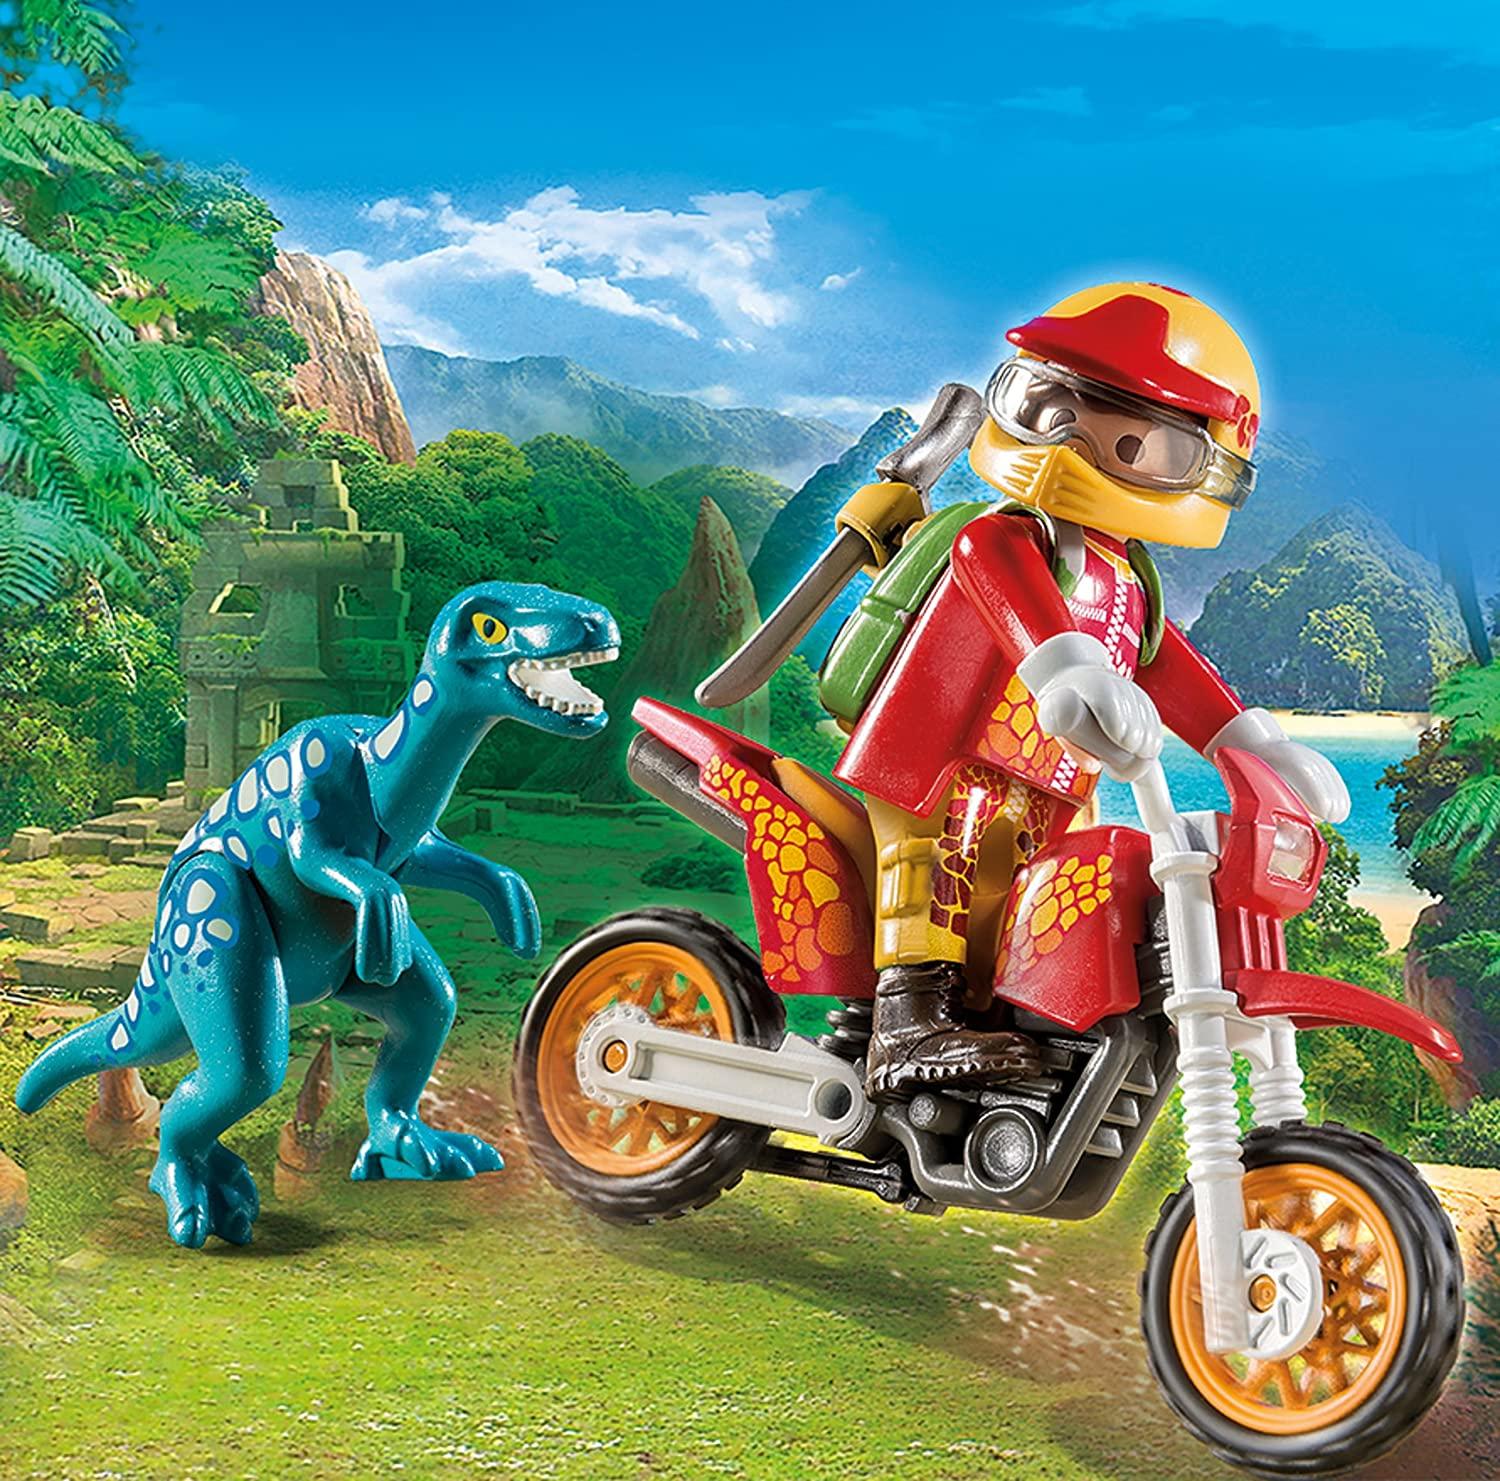 Playmobil 9431 Motorcross Bike With Raptor Toymaster Ballina